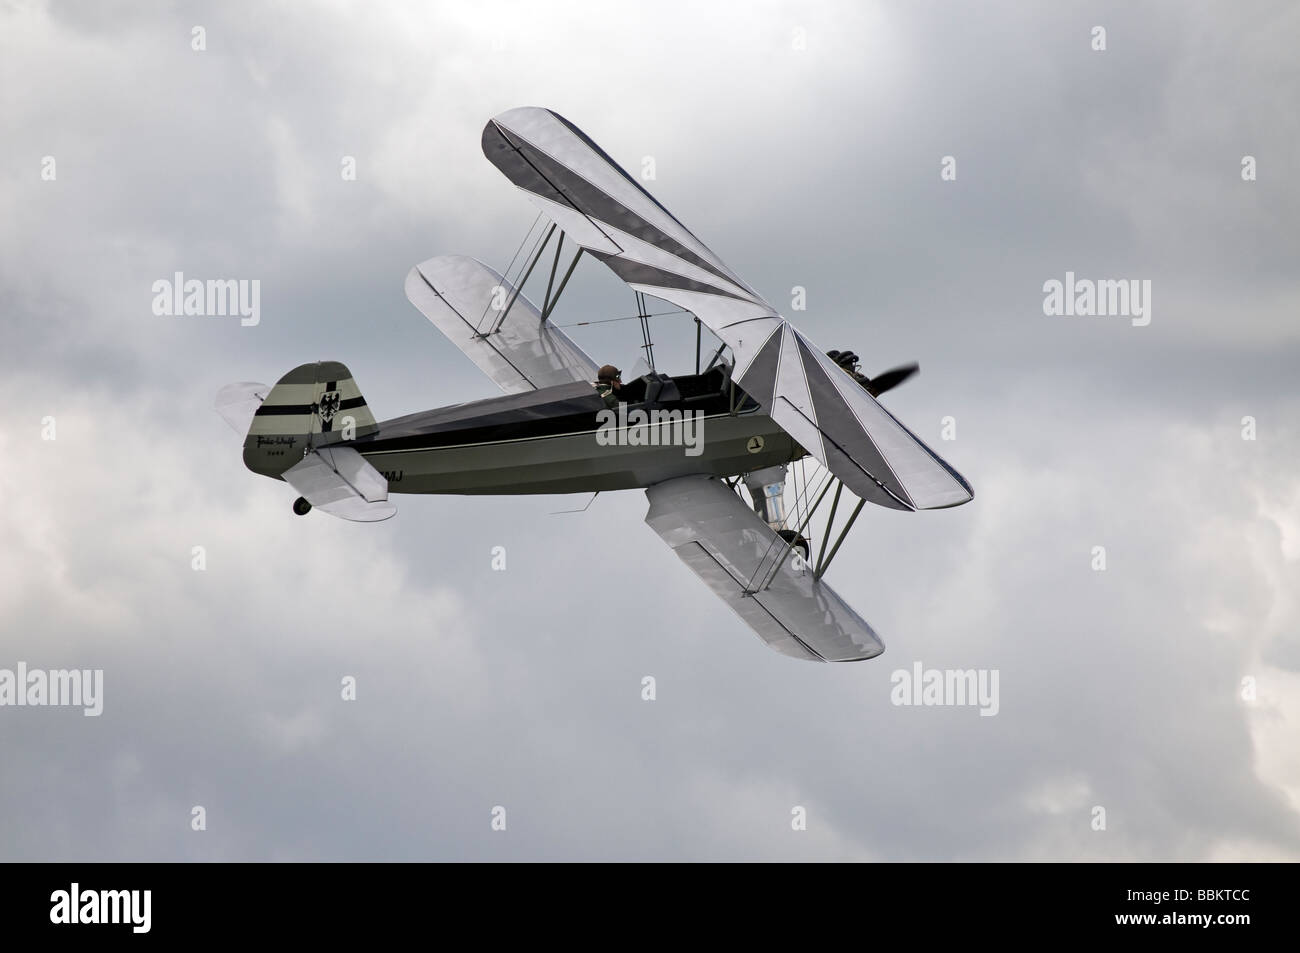 Ferte Alais Focke-Wulf biplane aircraft flying Stock Photo